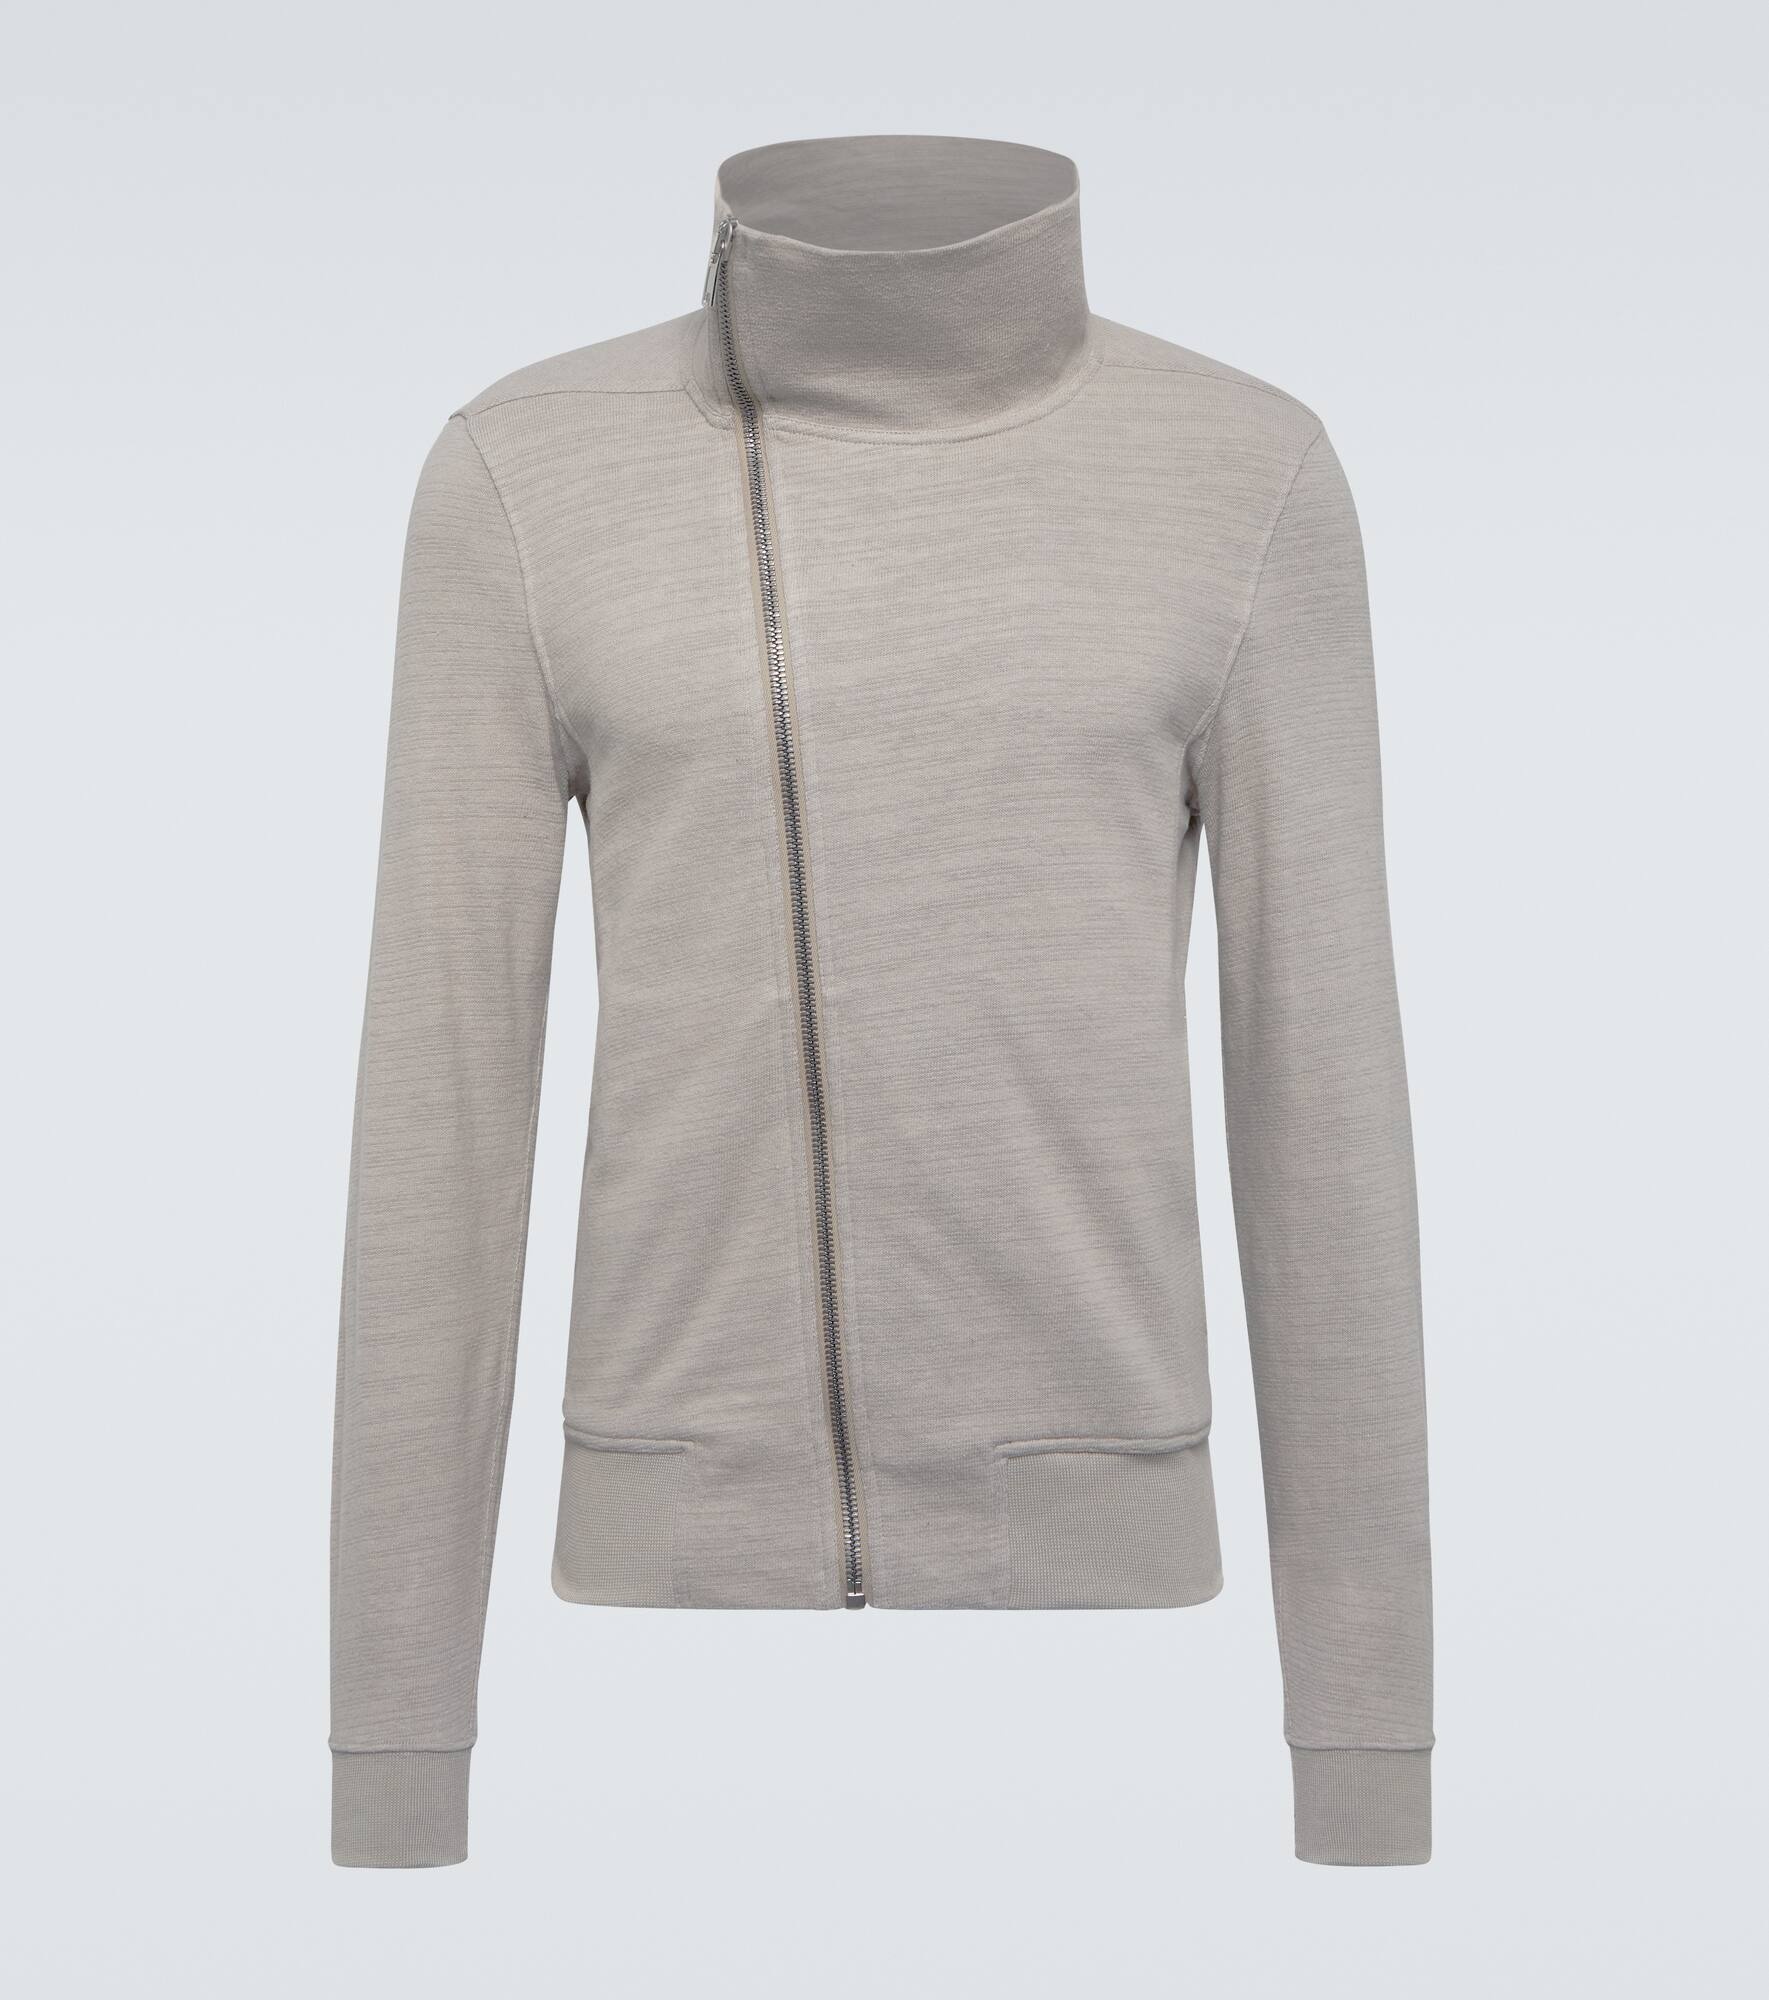 Asymmetric cotton sweatshirt jersey - 1